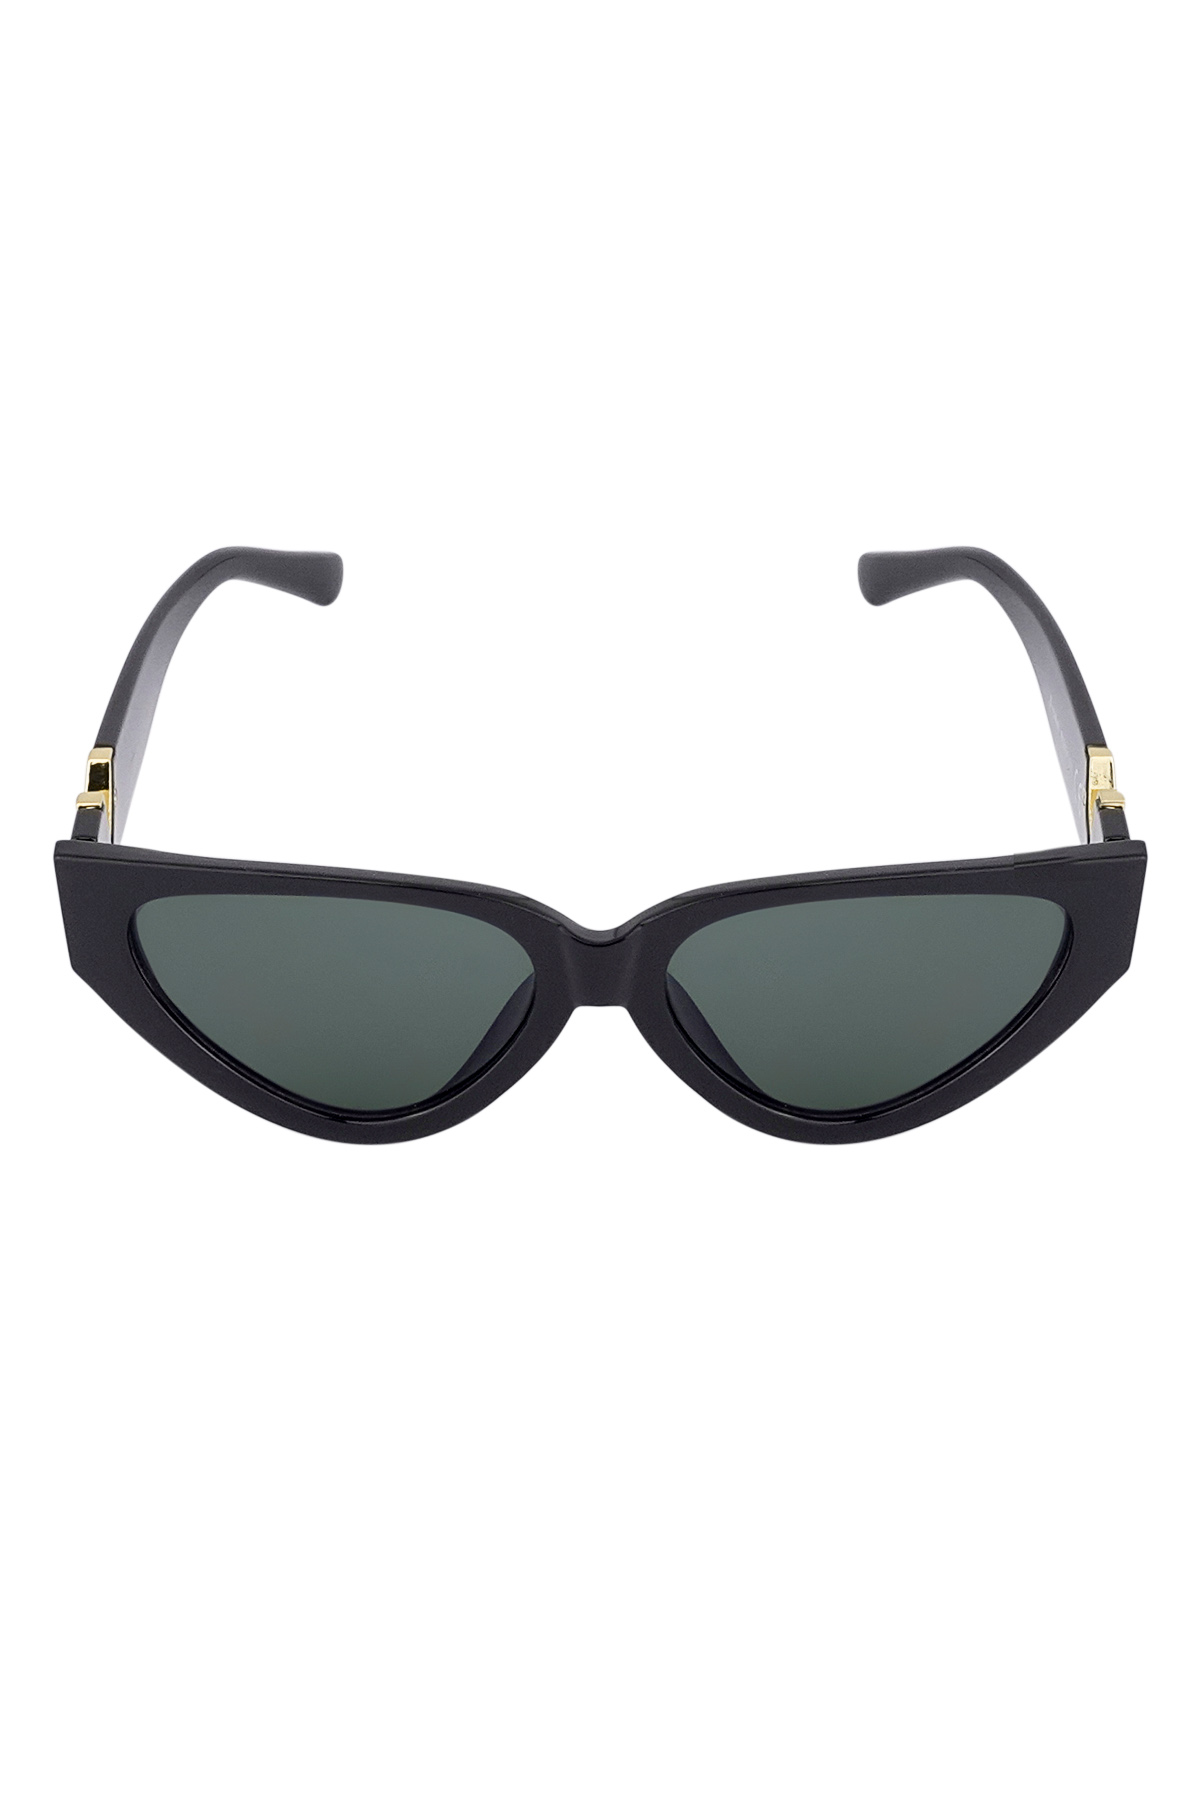 V statement sunglasses - black h5 Picture4